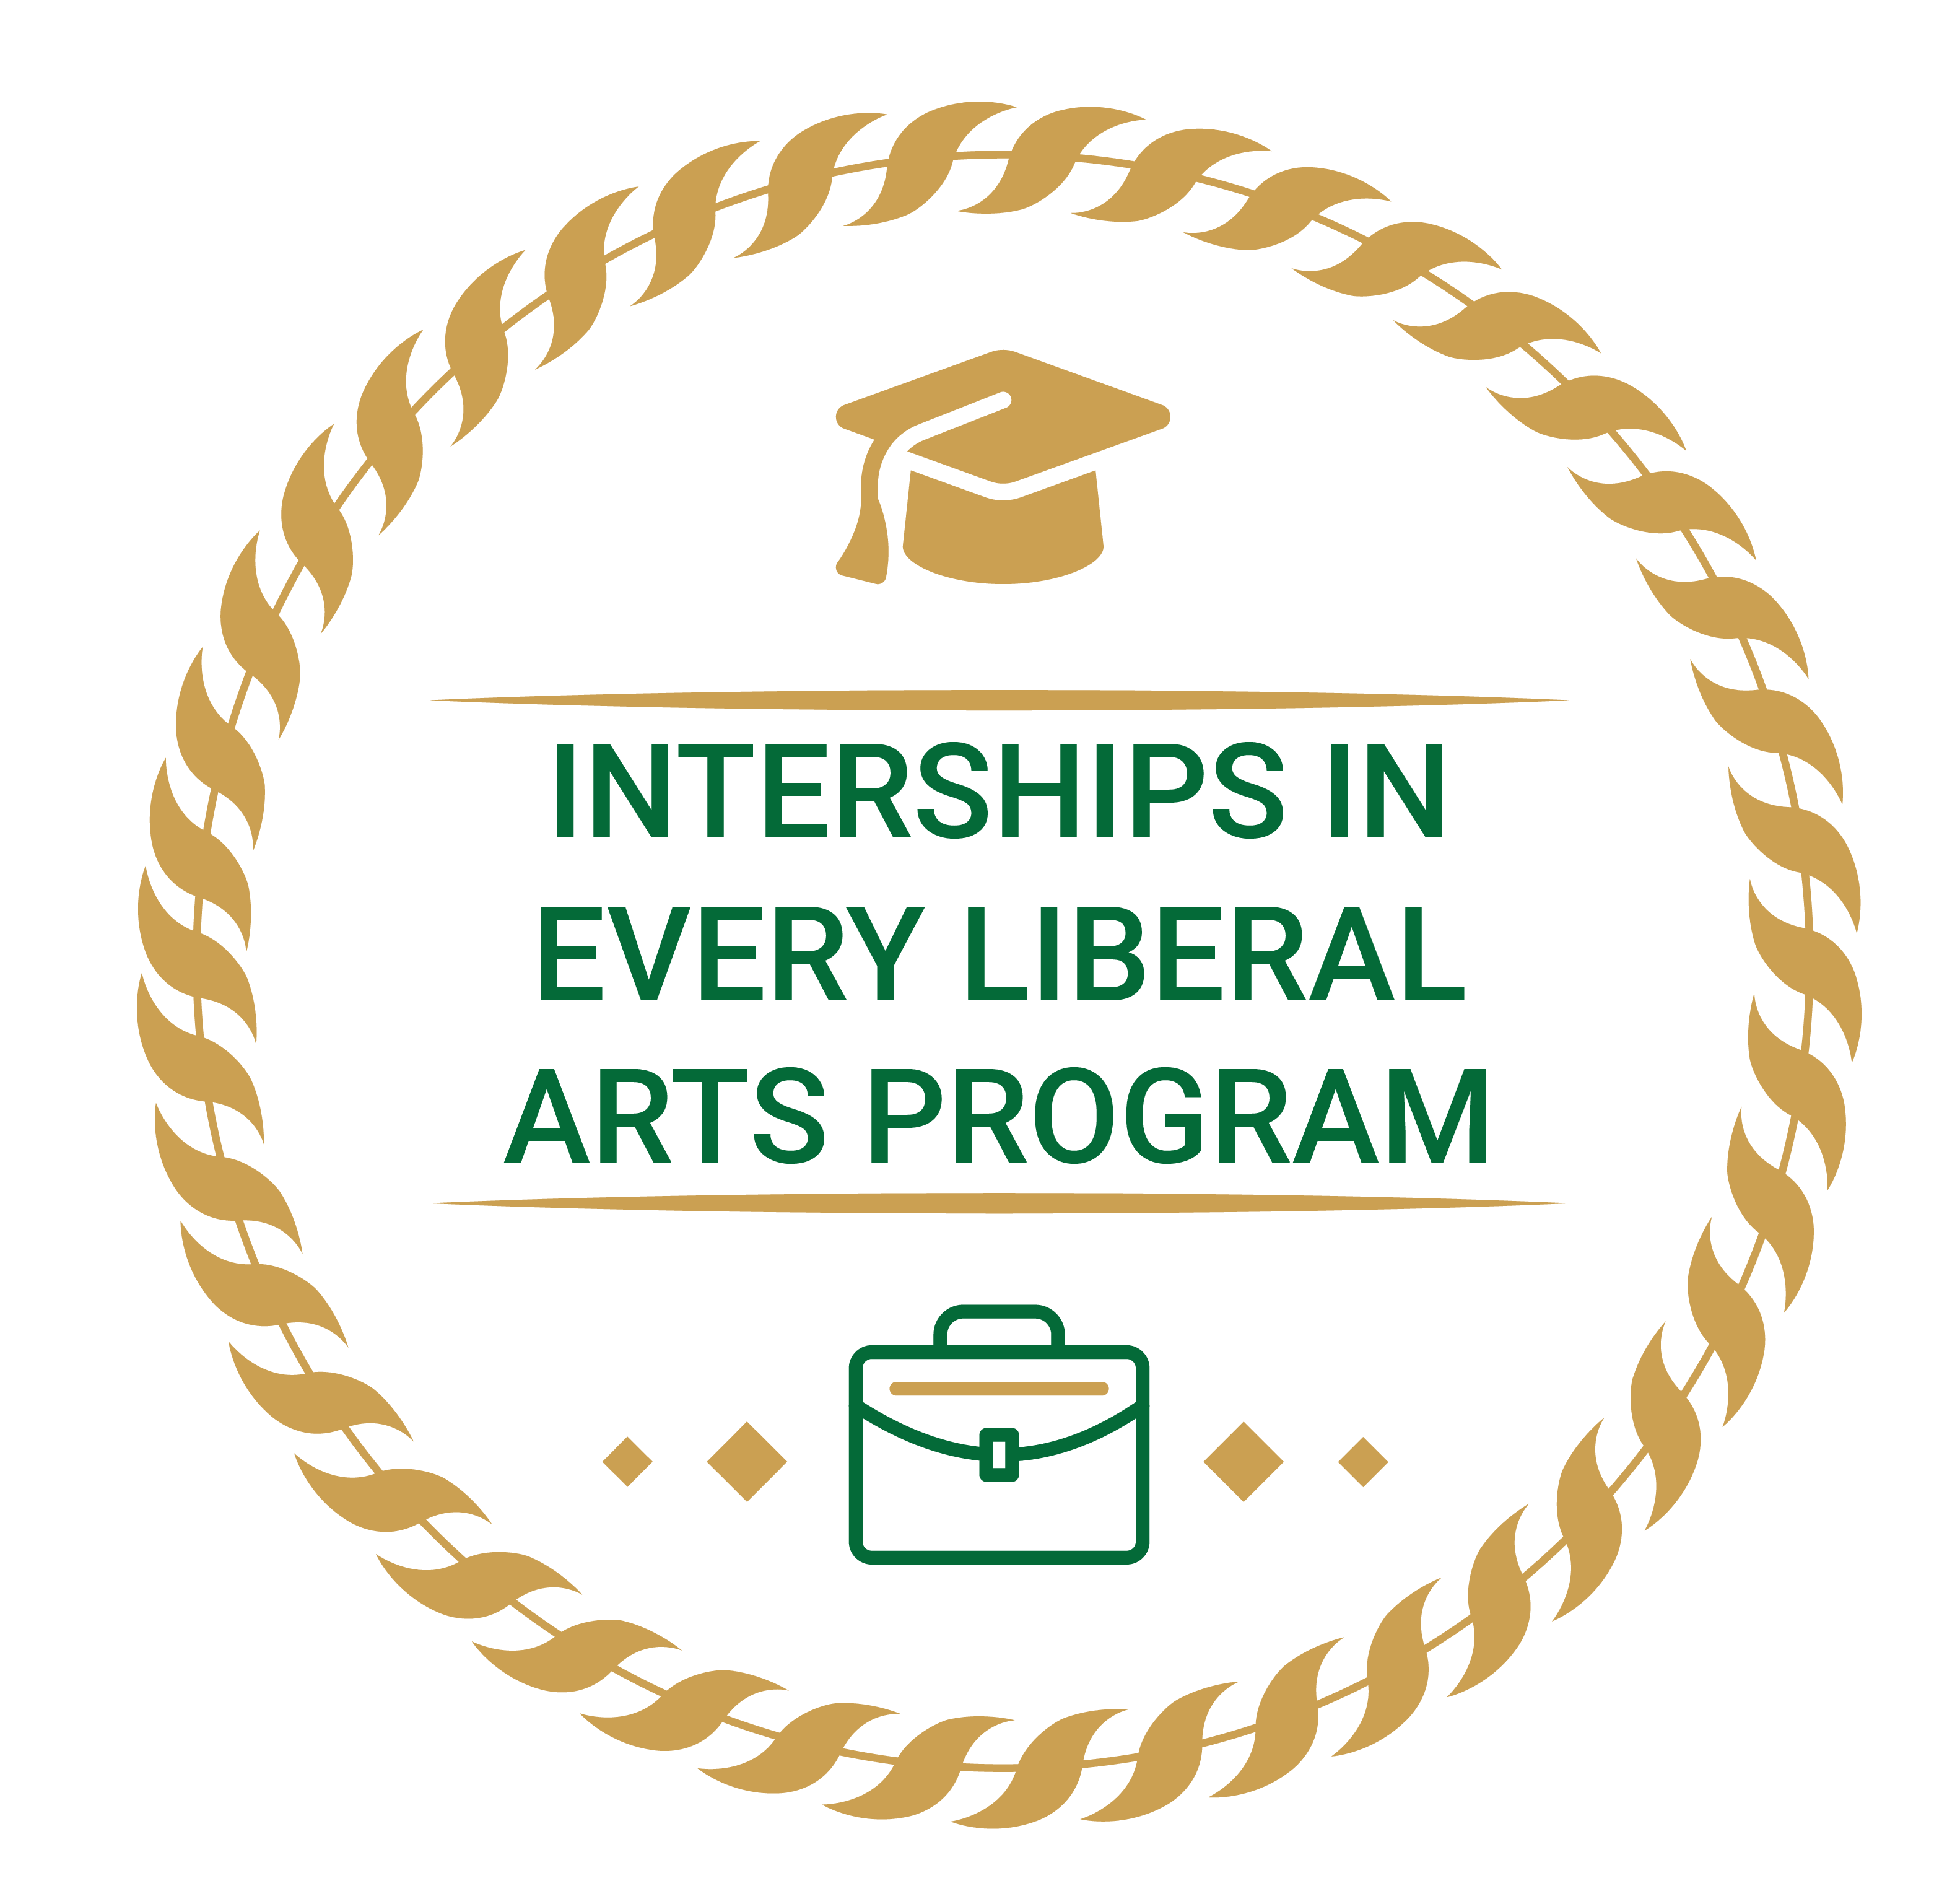 Internships in every liberal arts program